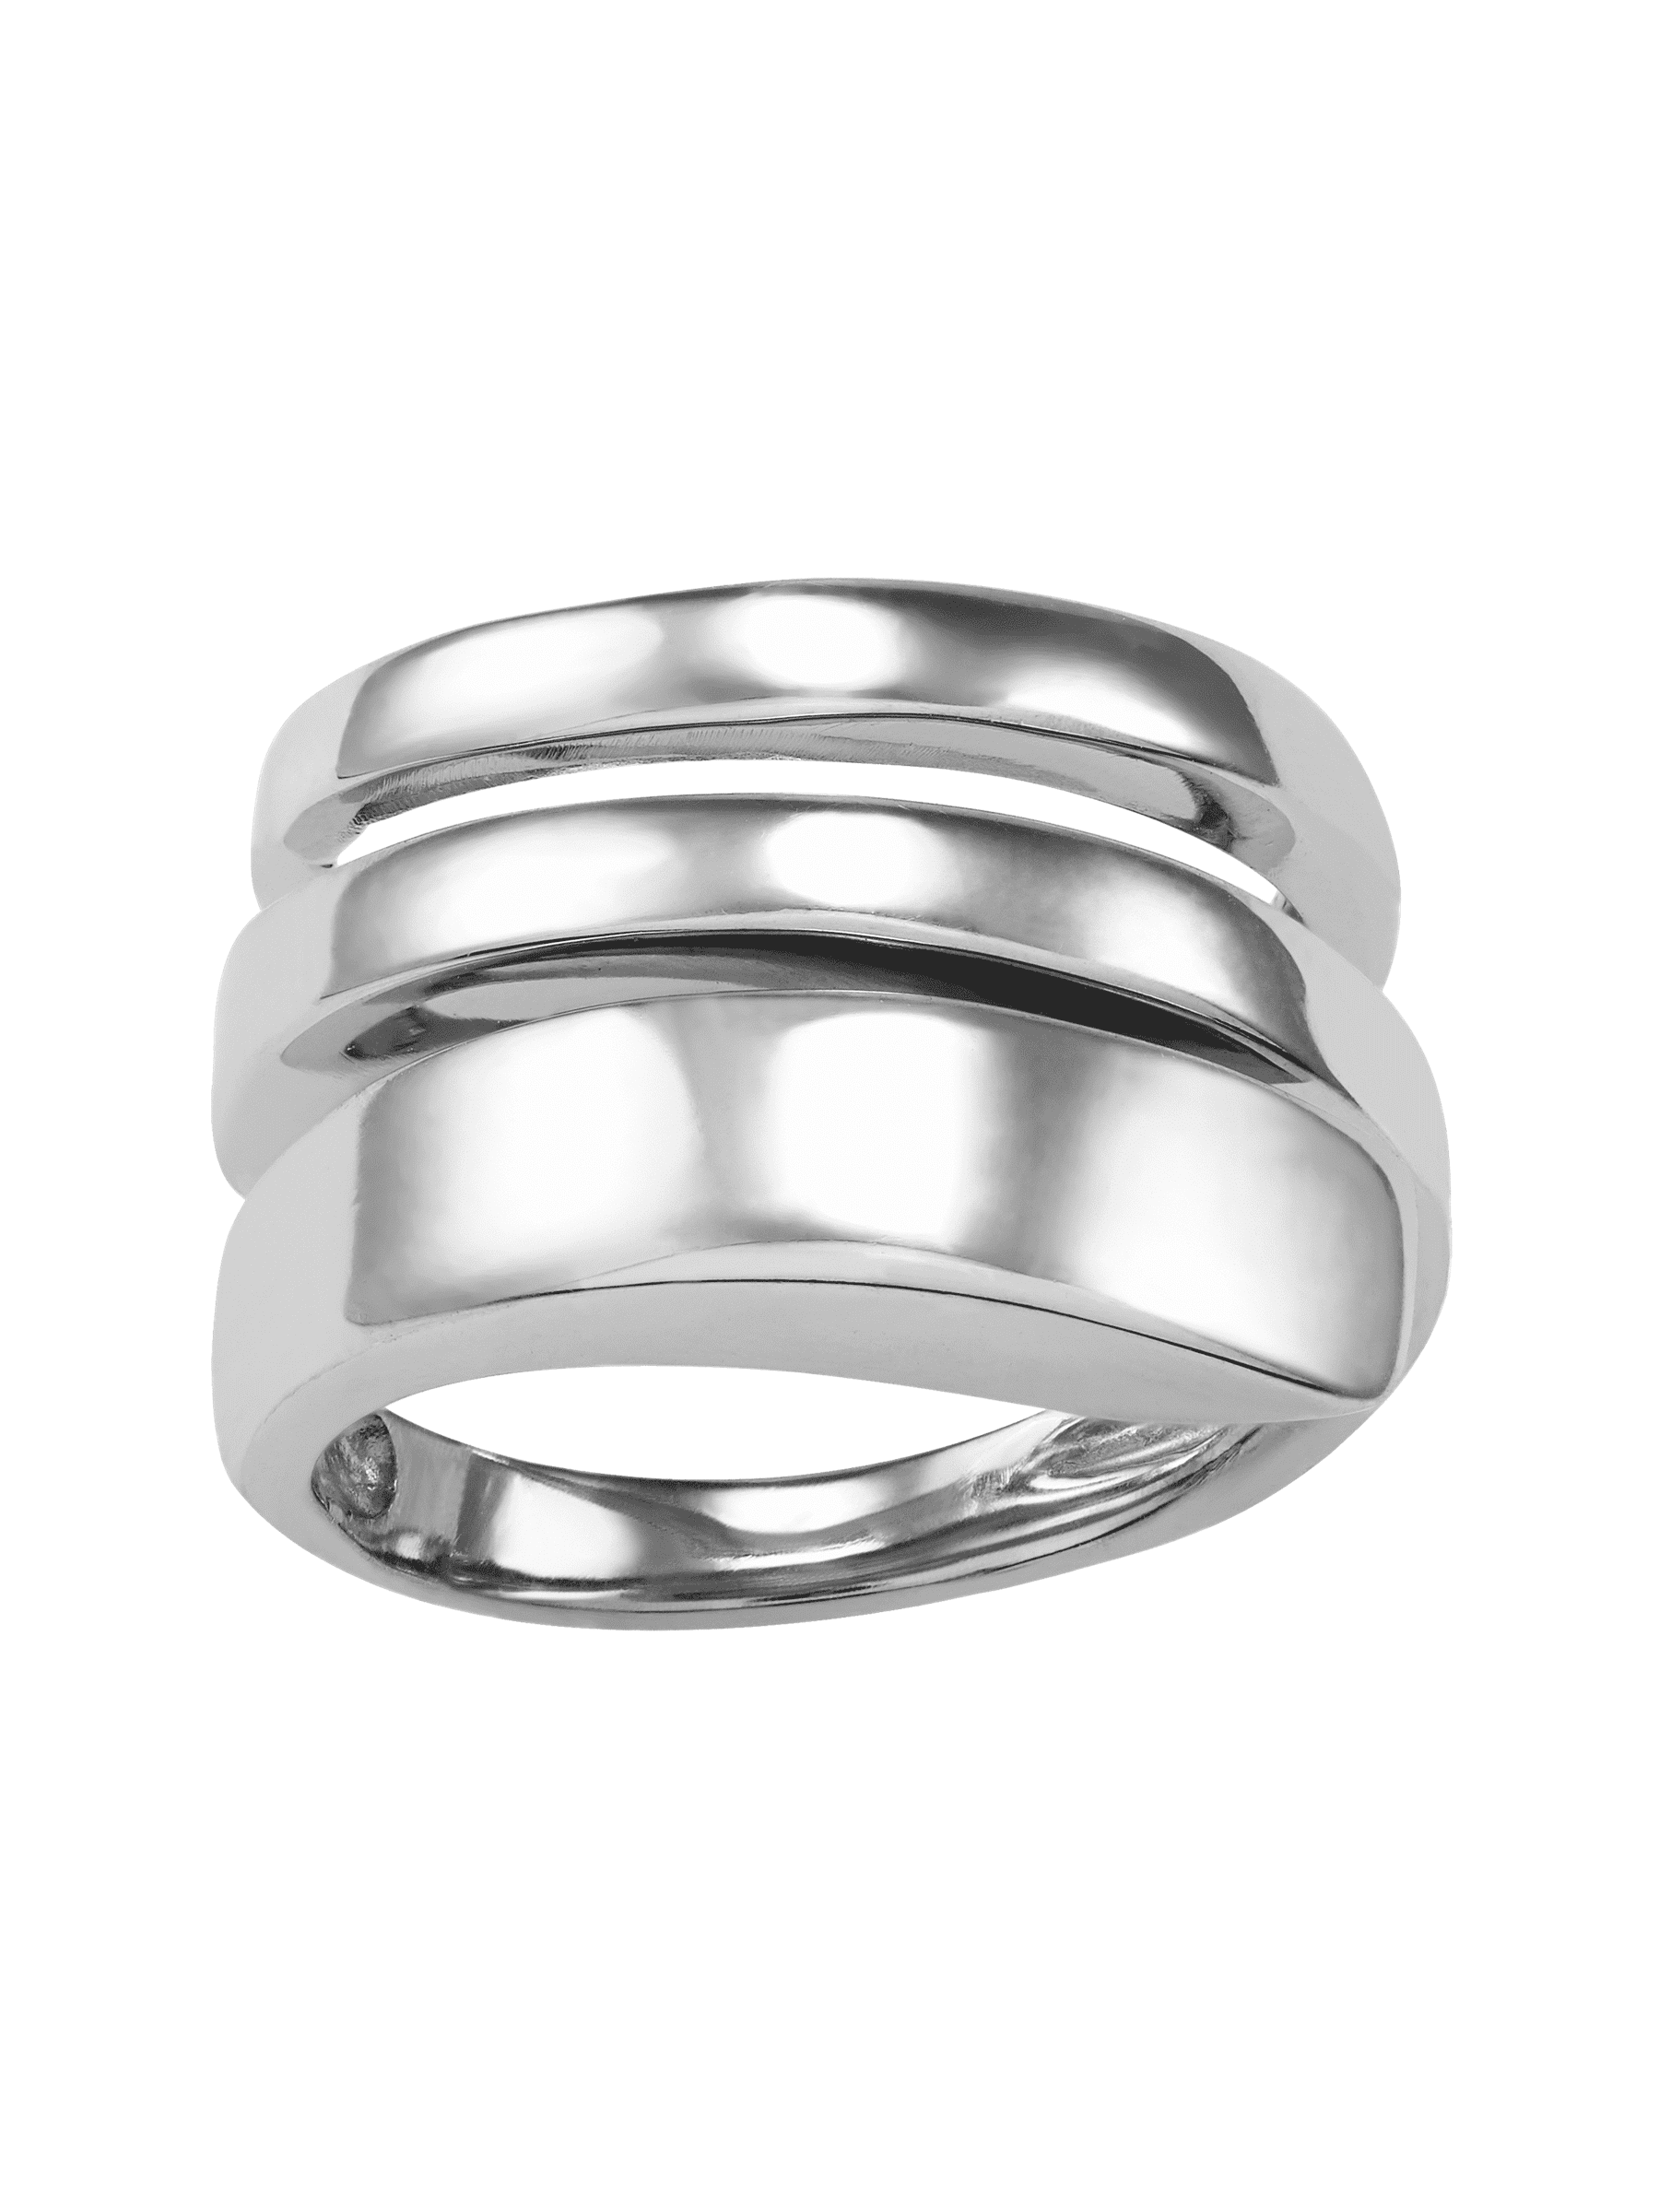 SE Plastic Ring Sizer (23 Pc.) - 8903FG